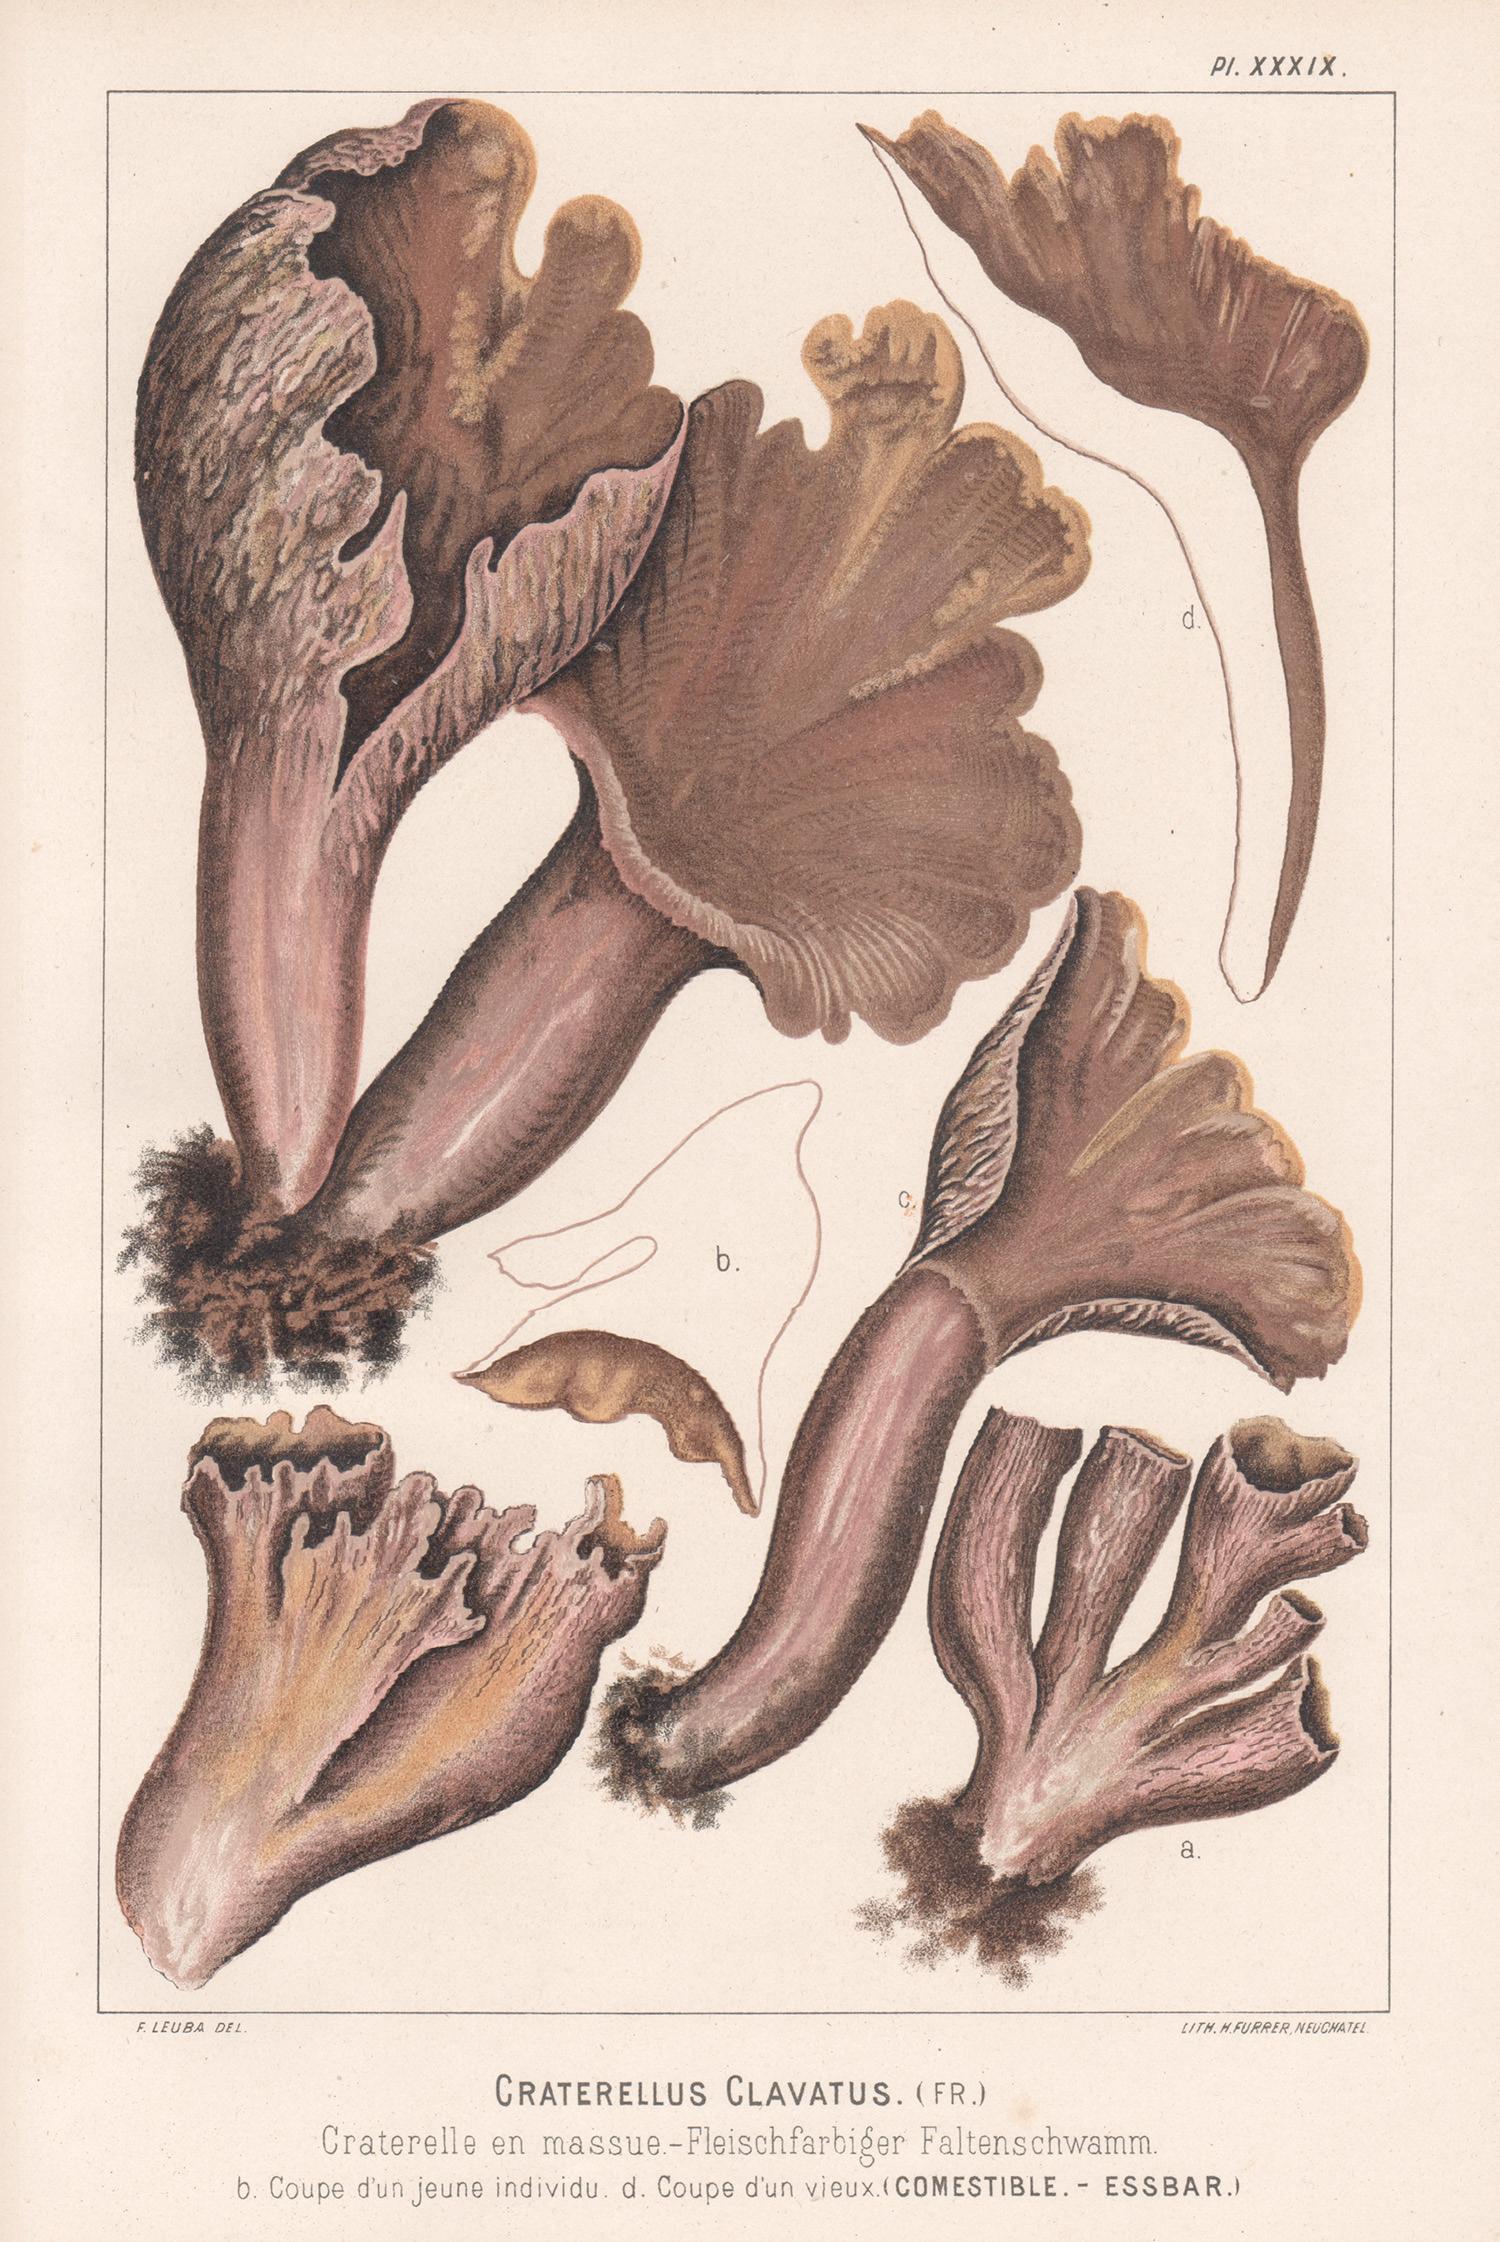 H Furrer after Fritz Leuba Still-Life Print - Craterellus Clavatus, Leuba antique mushroom fungi chromolithograph print